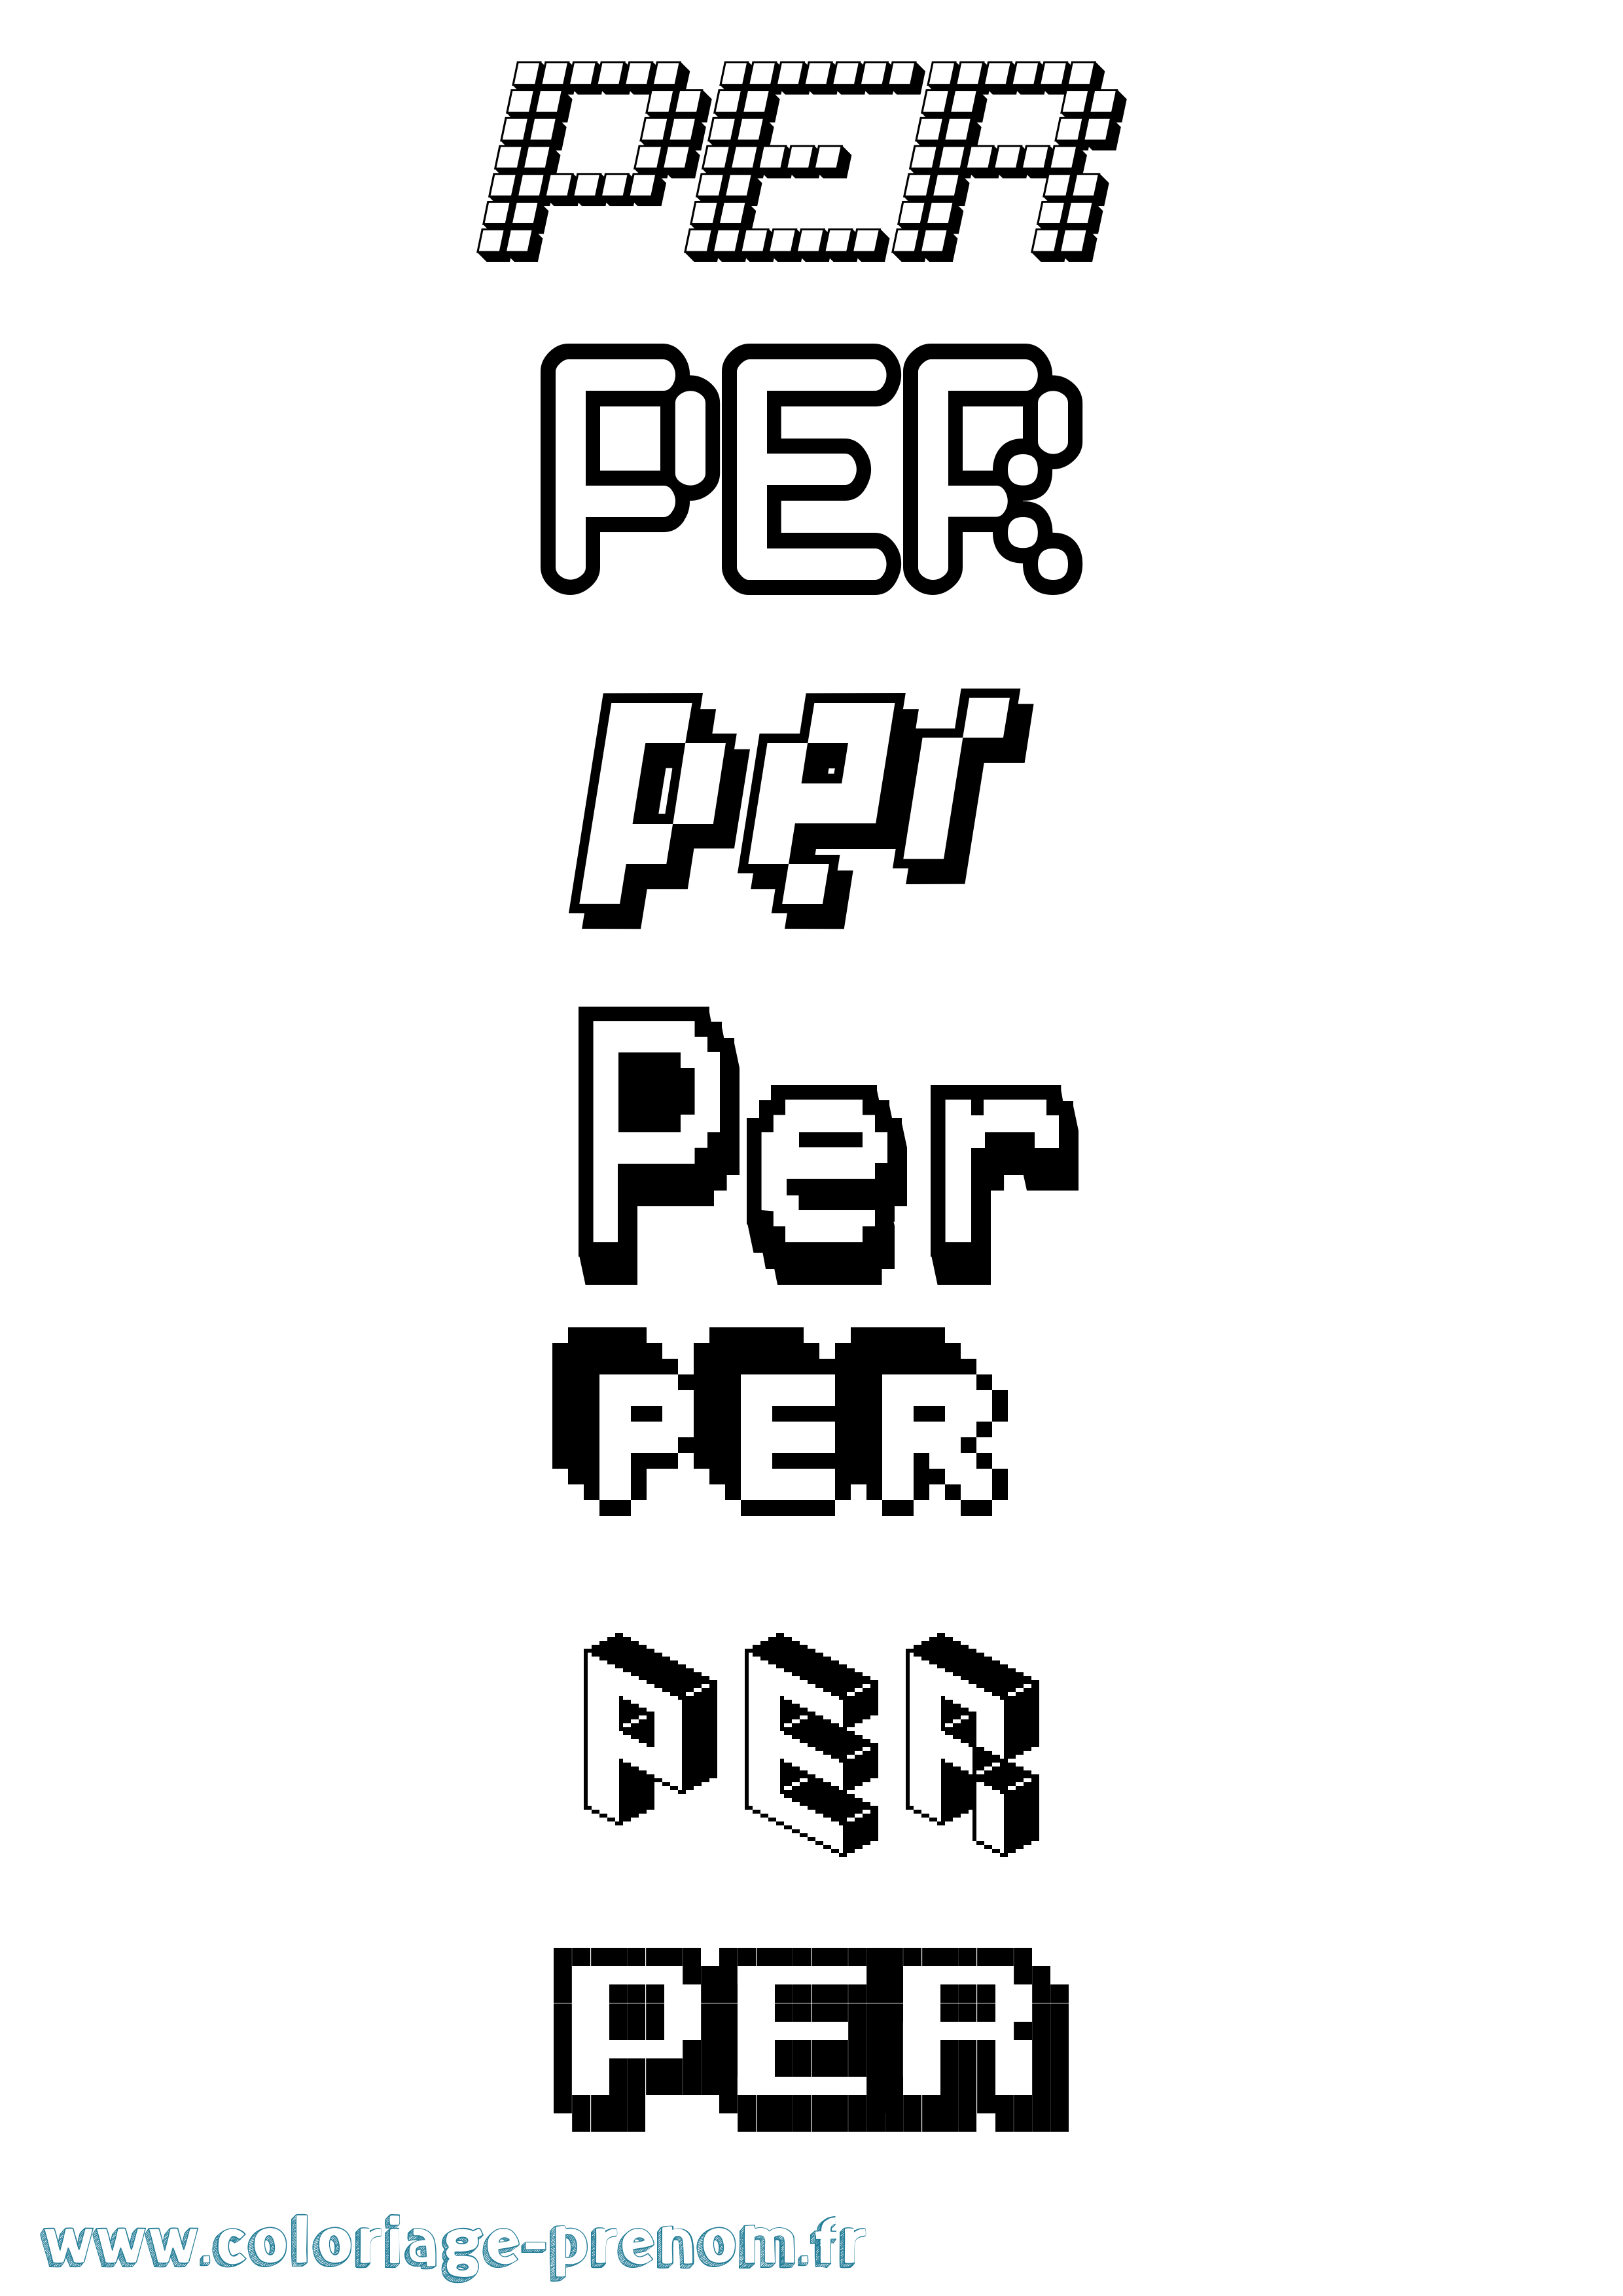 Coloriage prénom Per Pixel